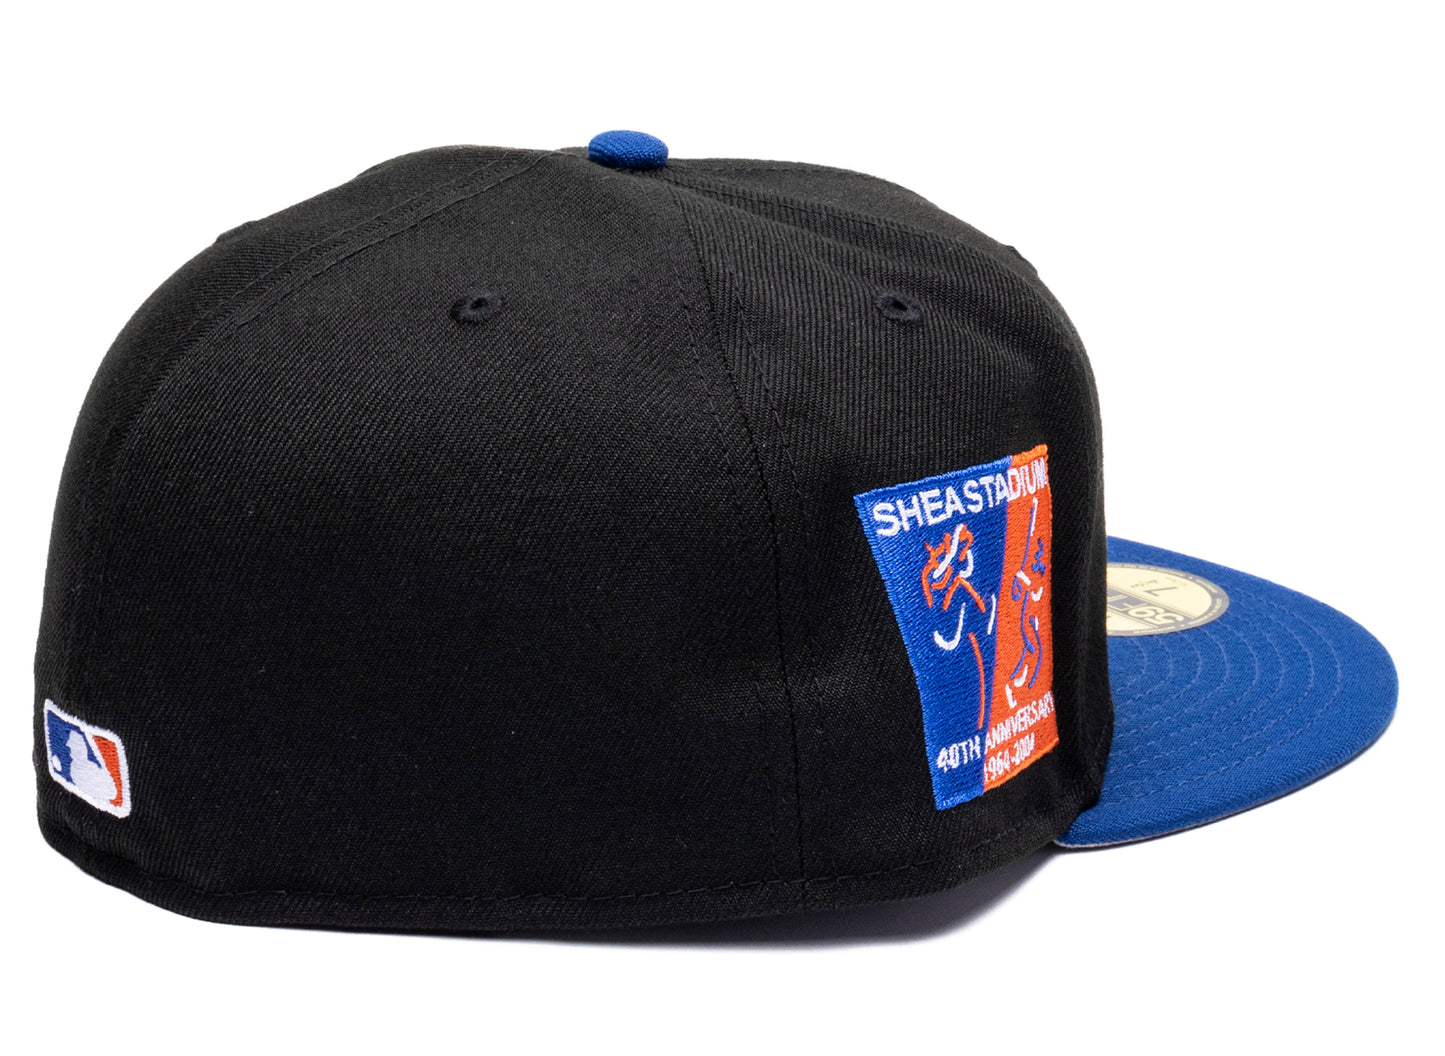 New Era New York Mets 40th Anniversary Hat xld